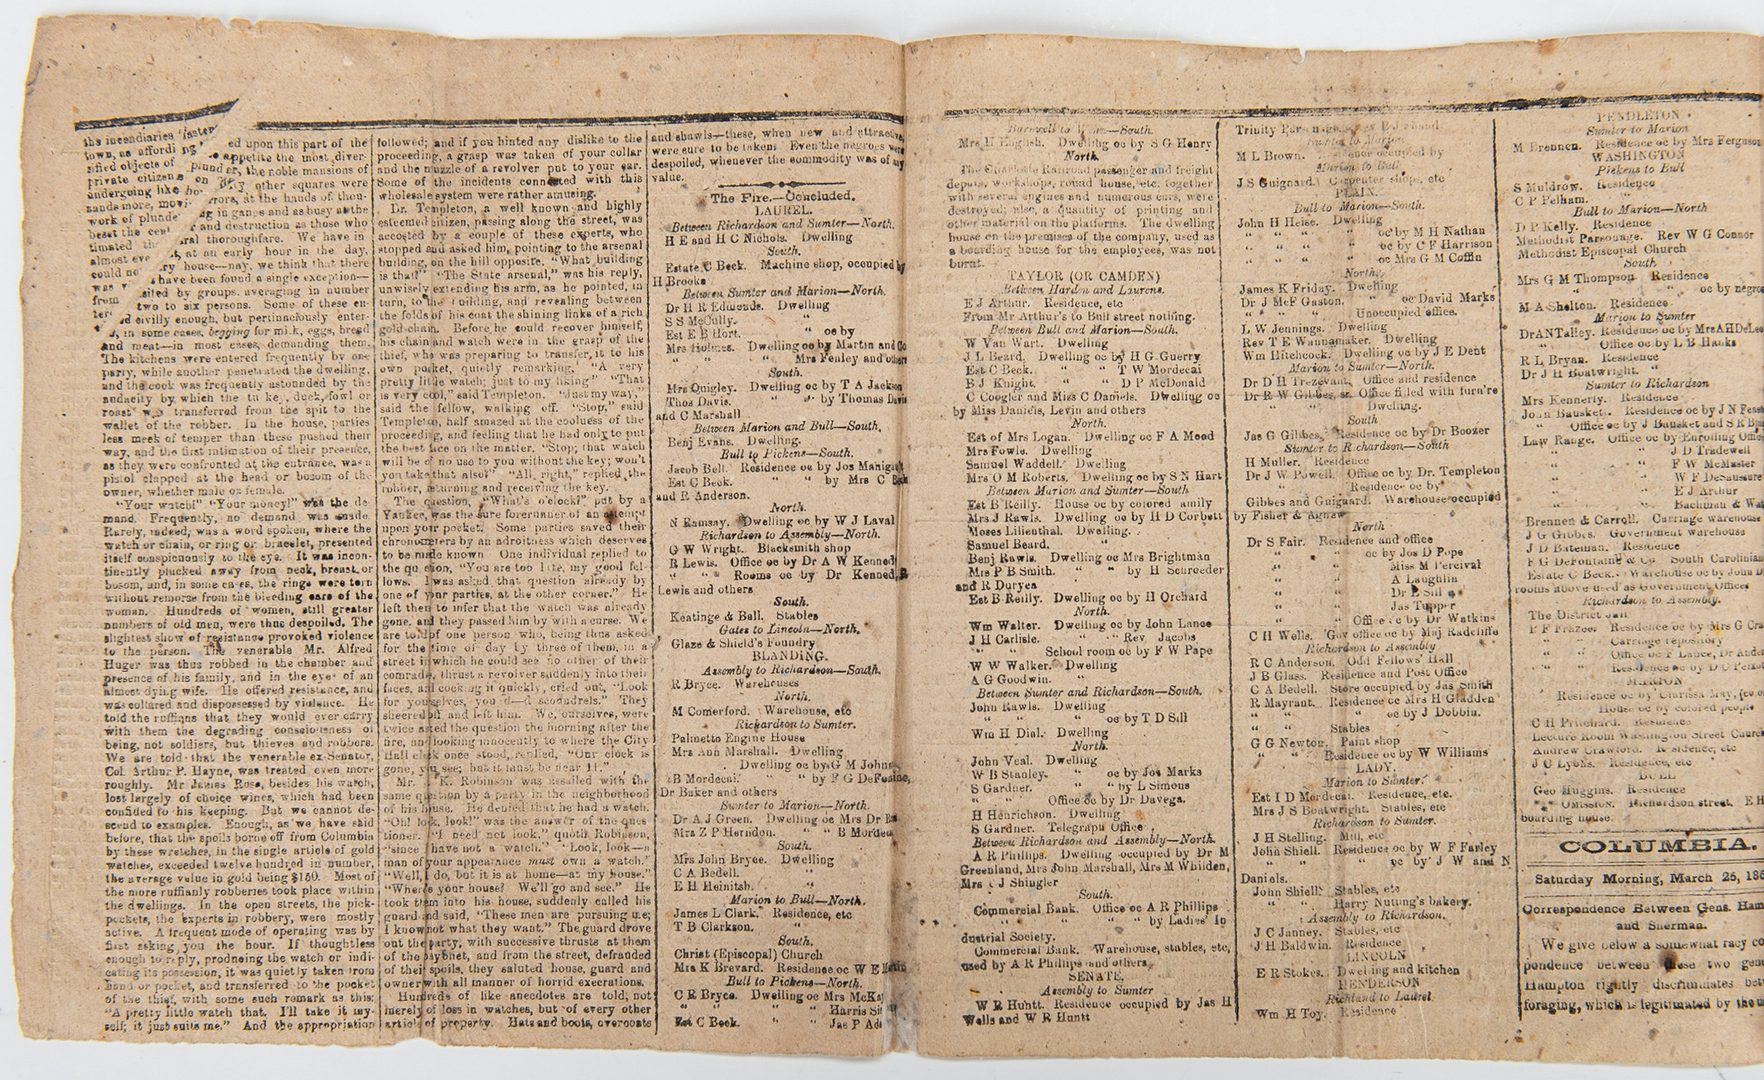 Lot 257: 3 Civil War era Newspapers, incl. Columbia Phoenix